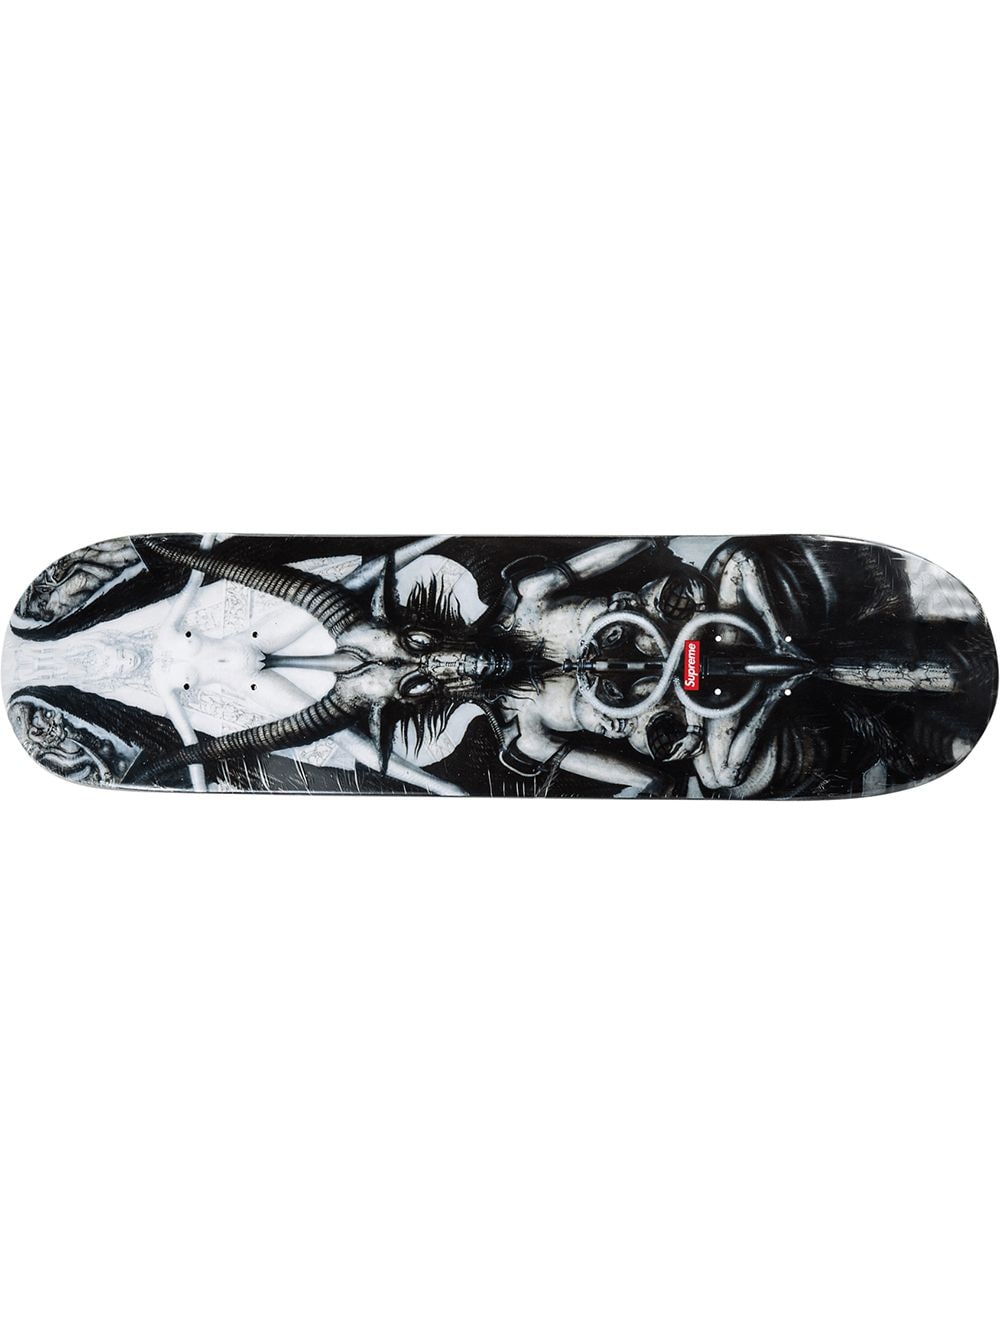 Supreme Giger graphic-print skateboard - Black von Supreme